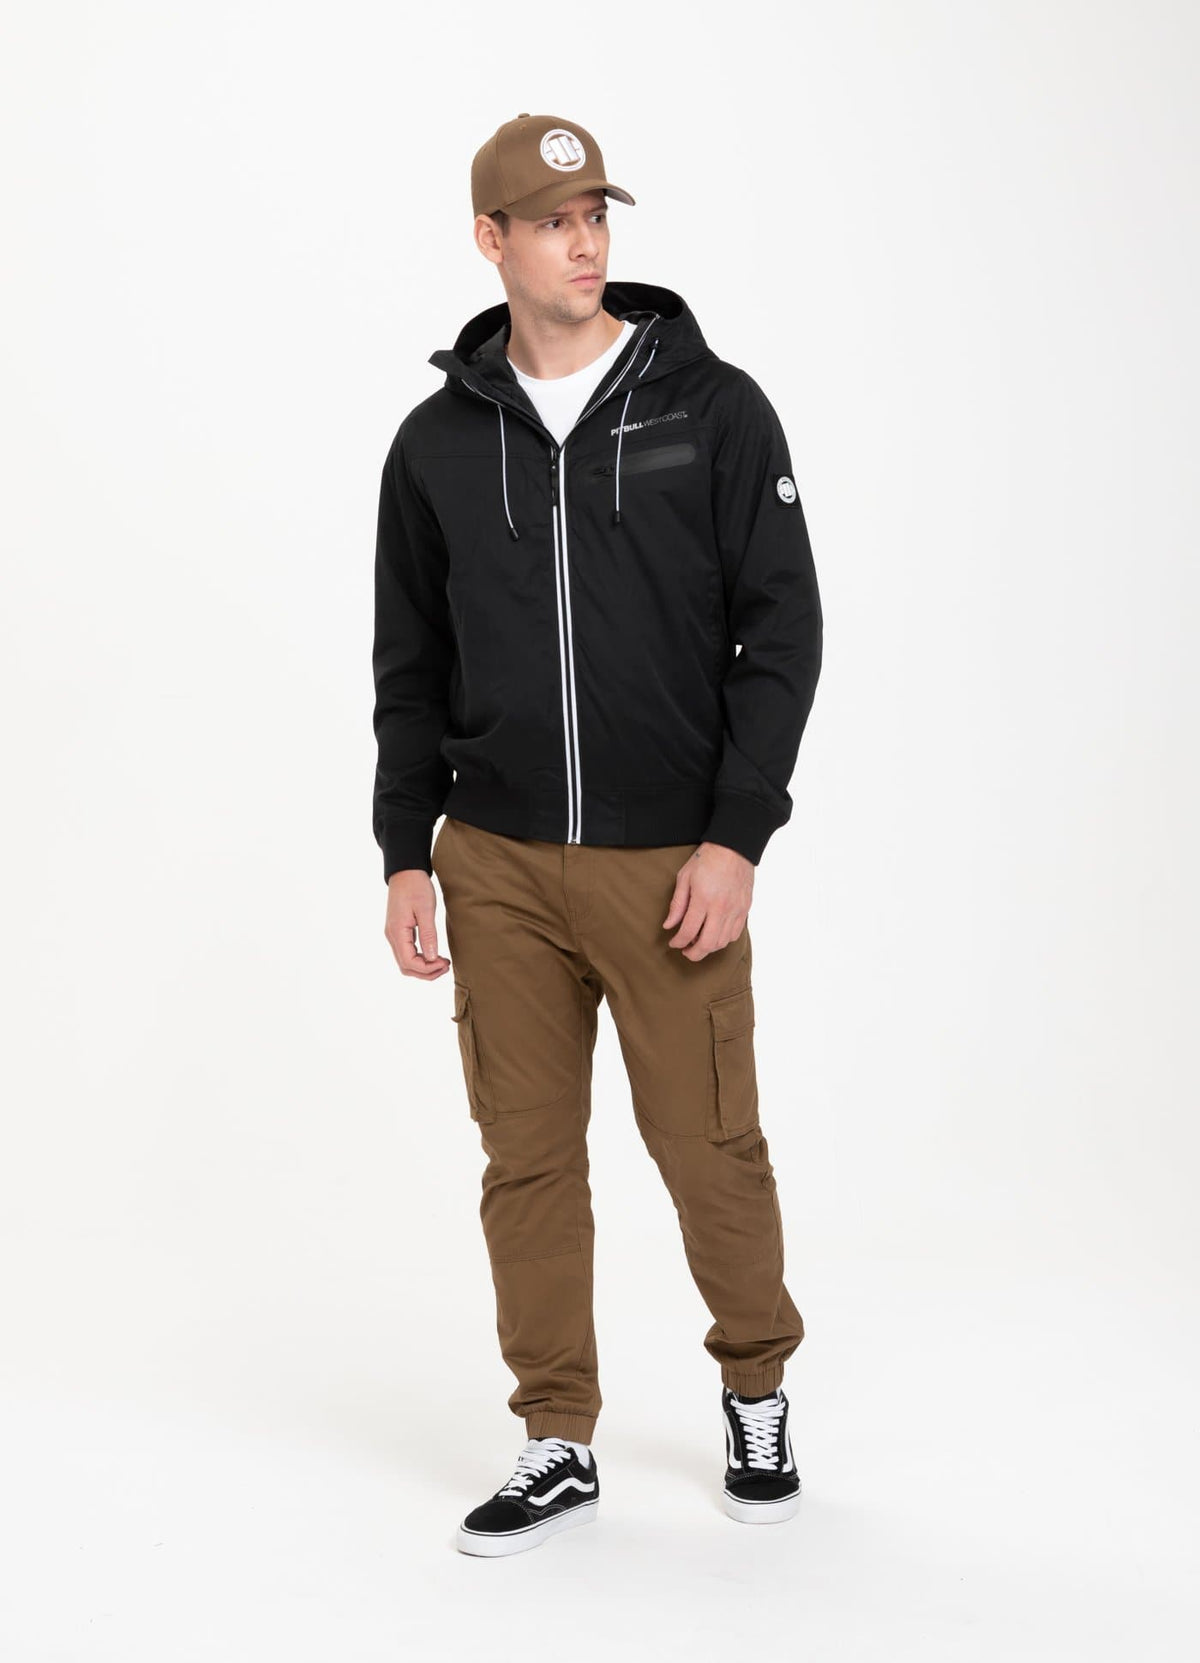 GROTON Hooded Jacket 2020 Black - Pitbull West Coast International Store 